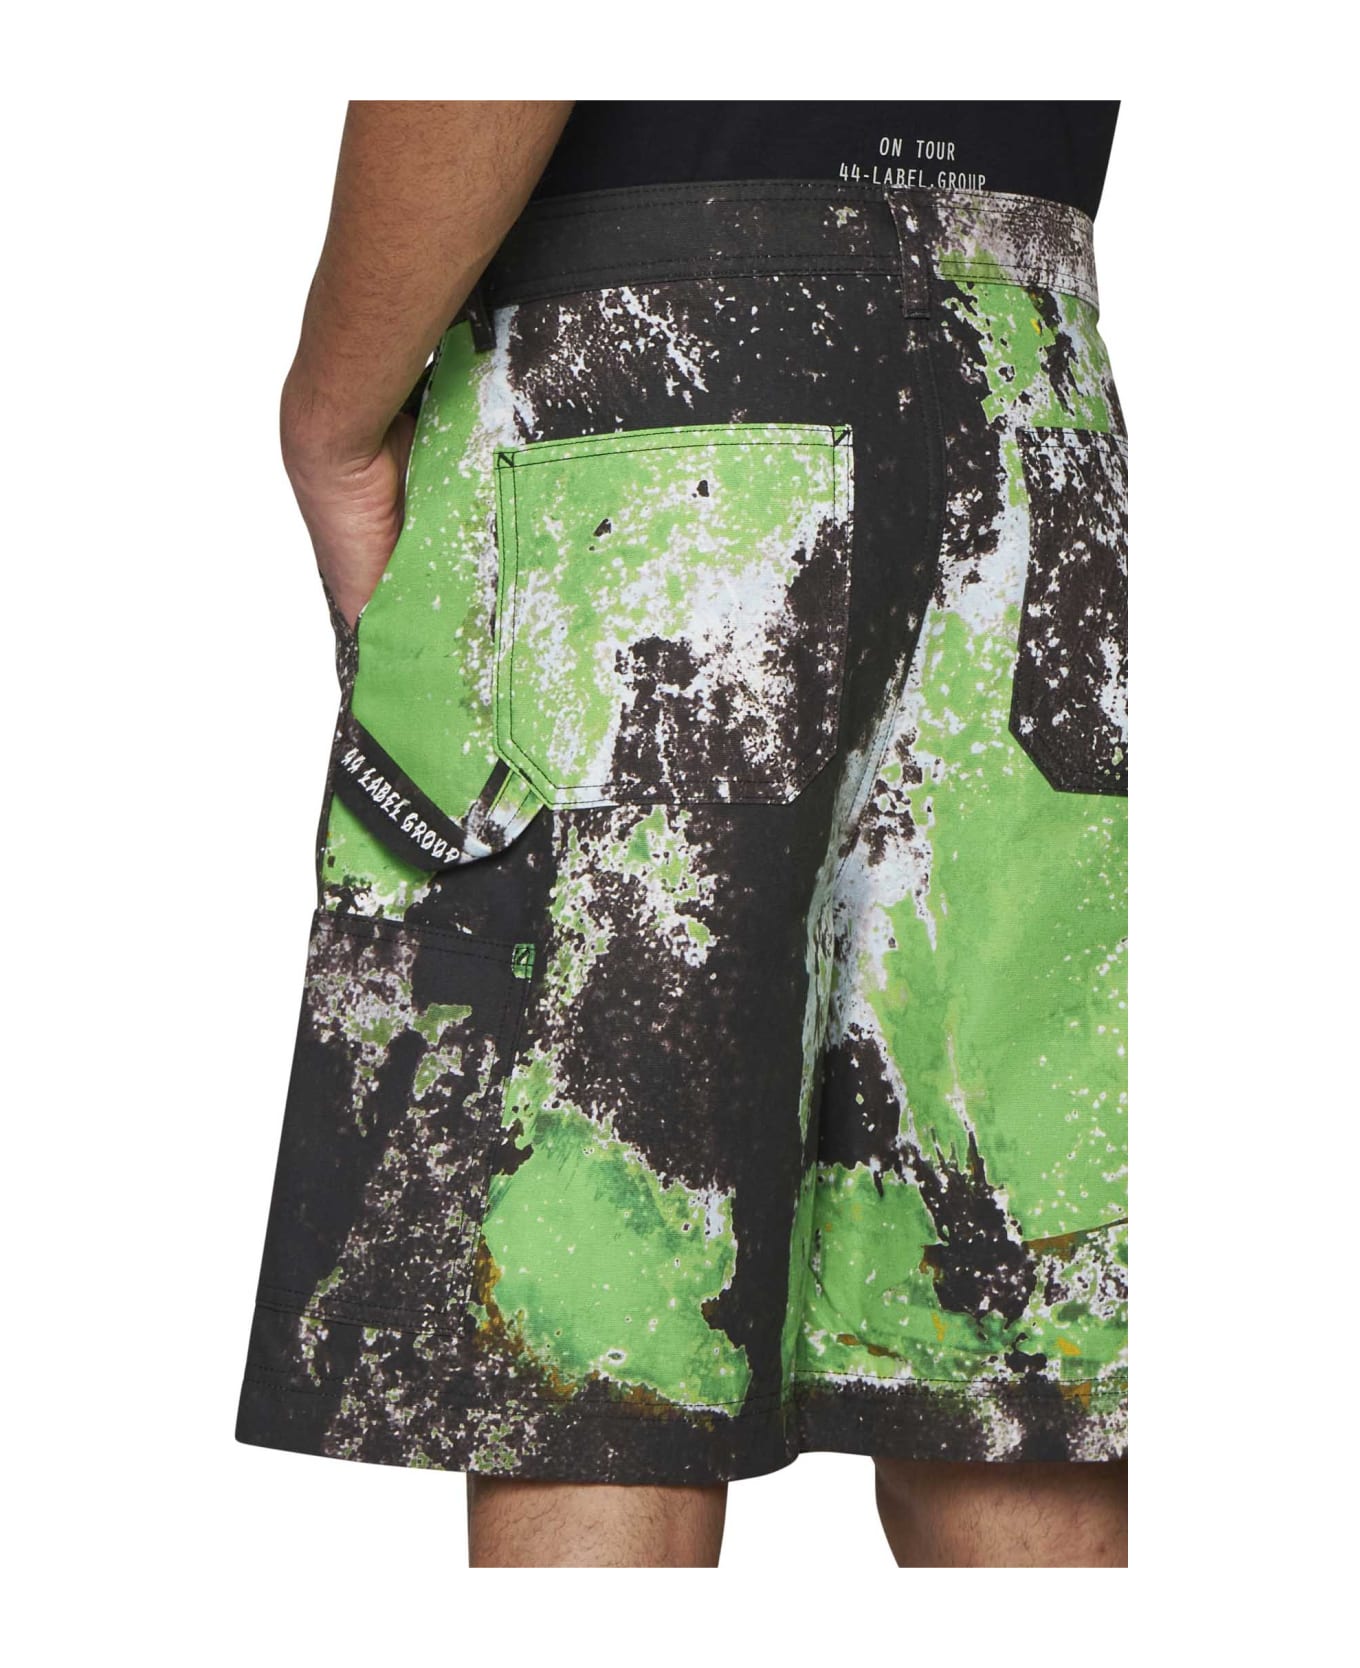 44 Label Group Shorts - Black+grunge green